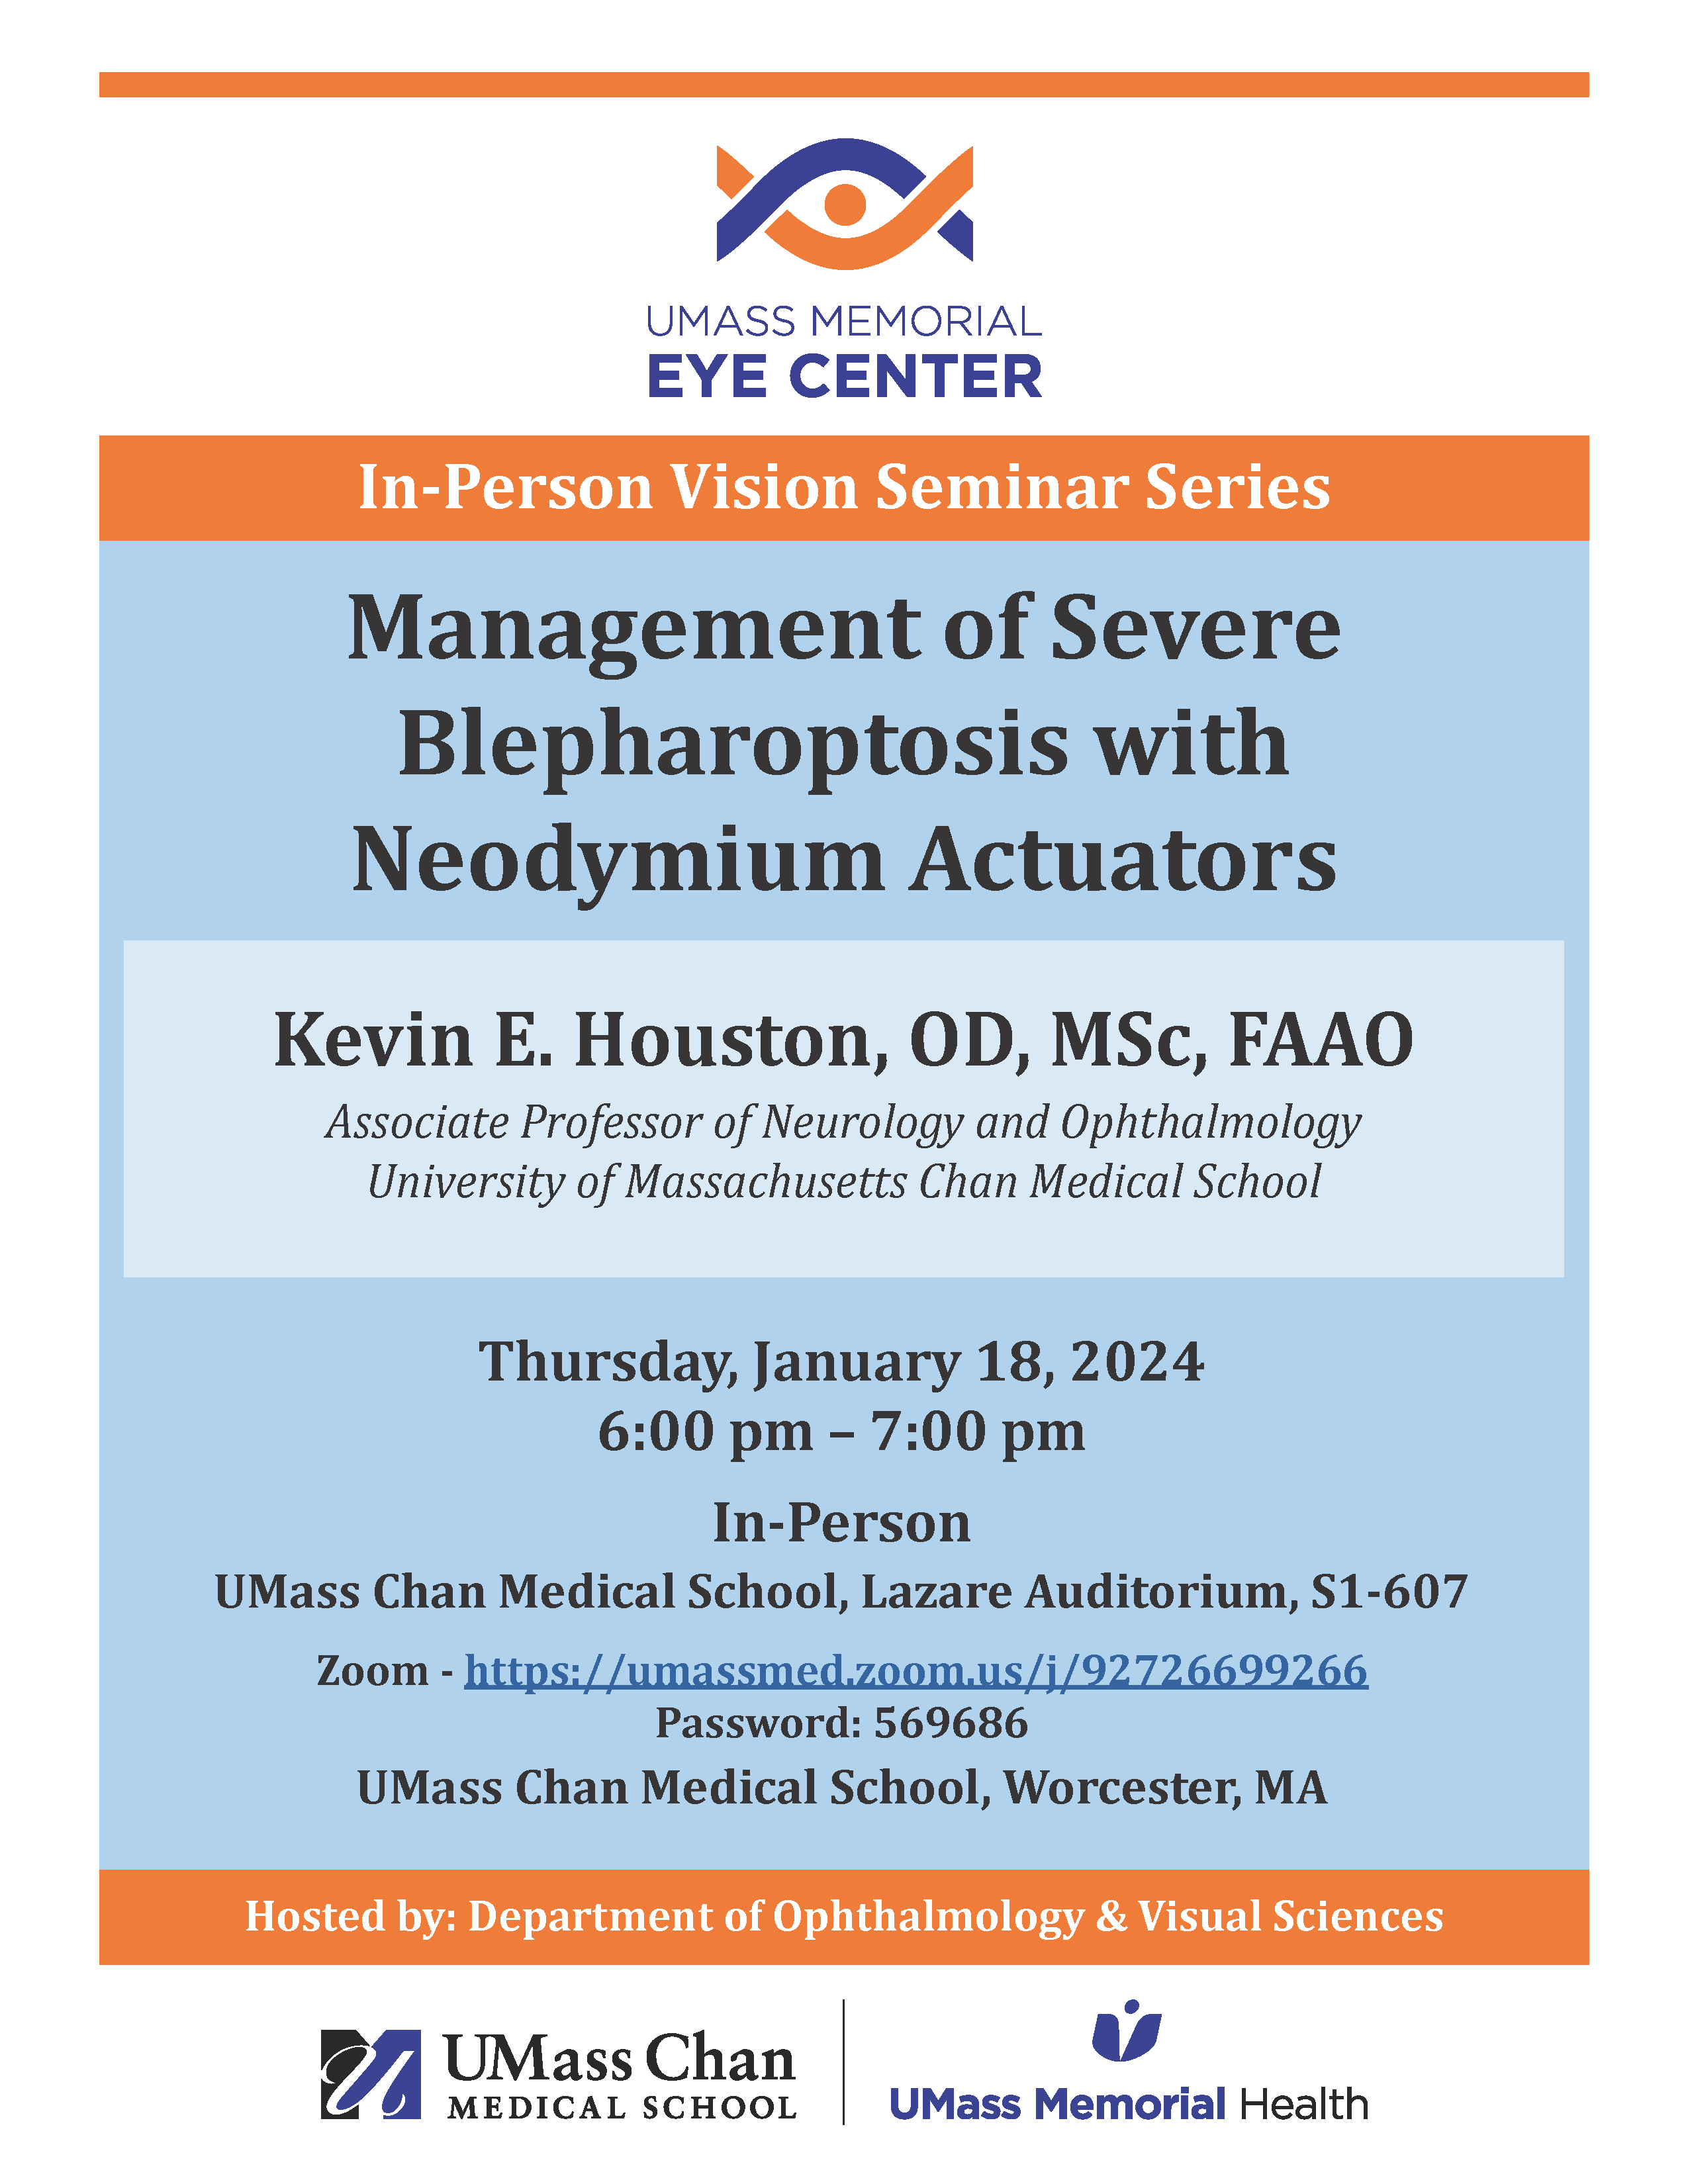 Management of Severe Blepharoptosis with Neodymium Actuators